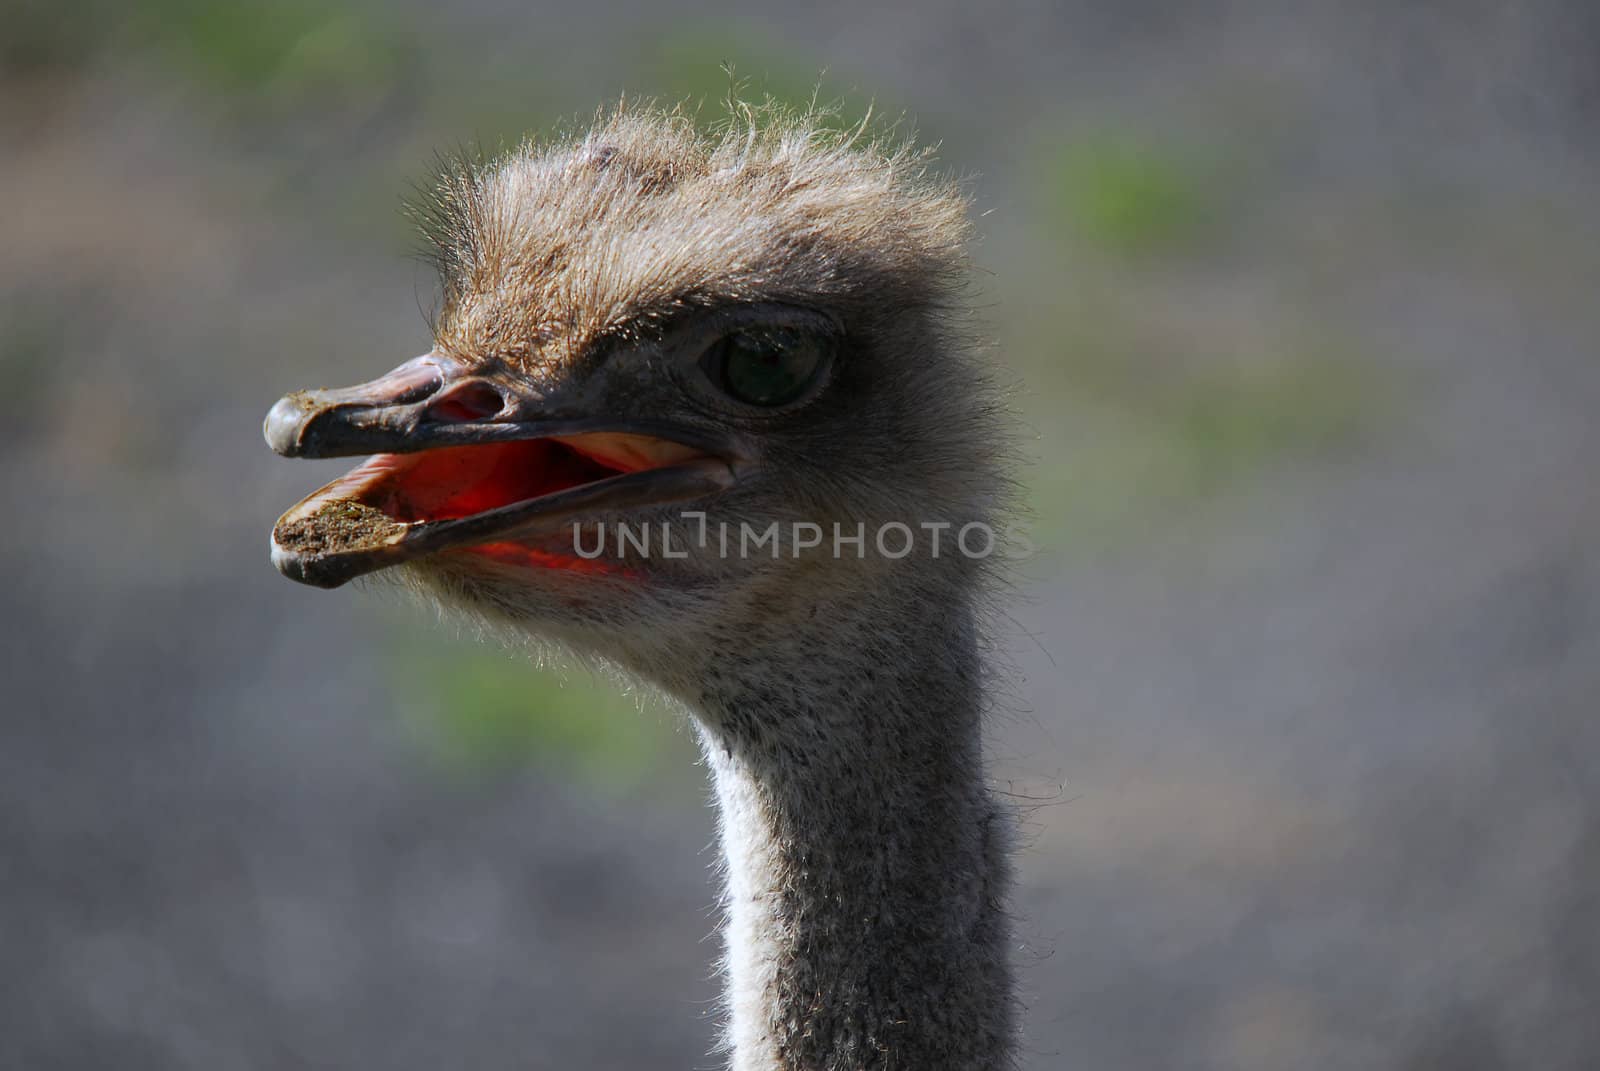 Close up portrait of an Ostrich head